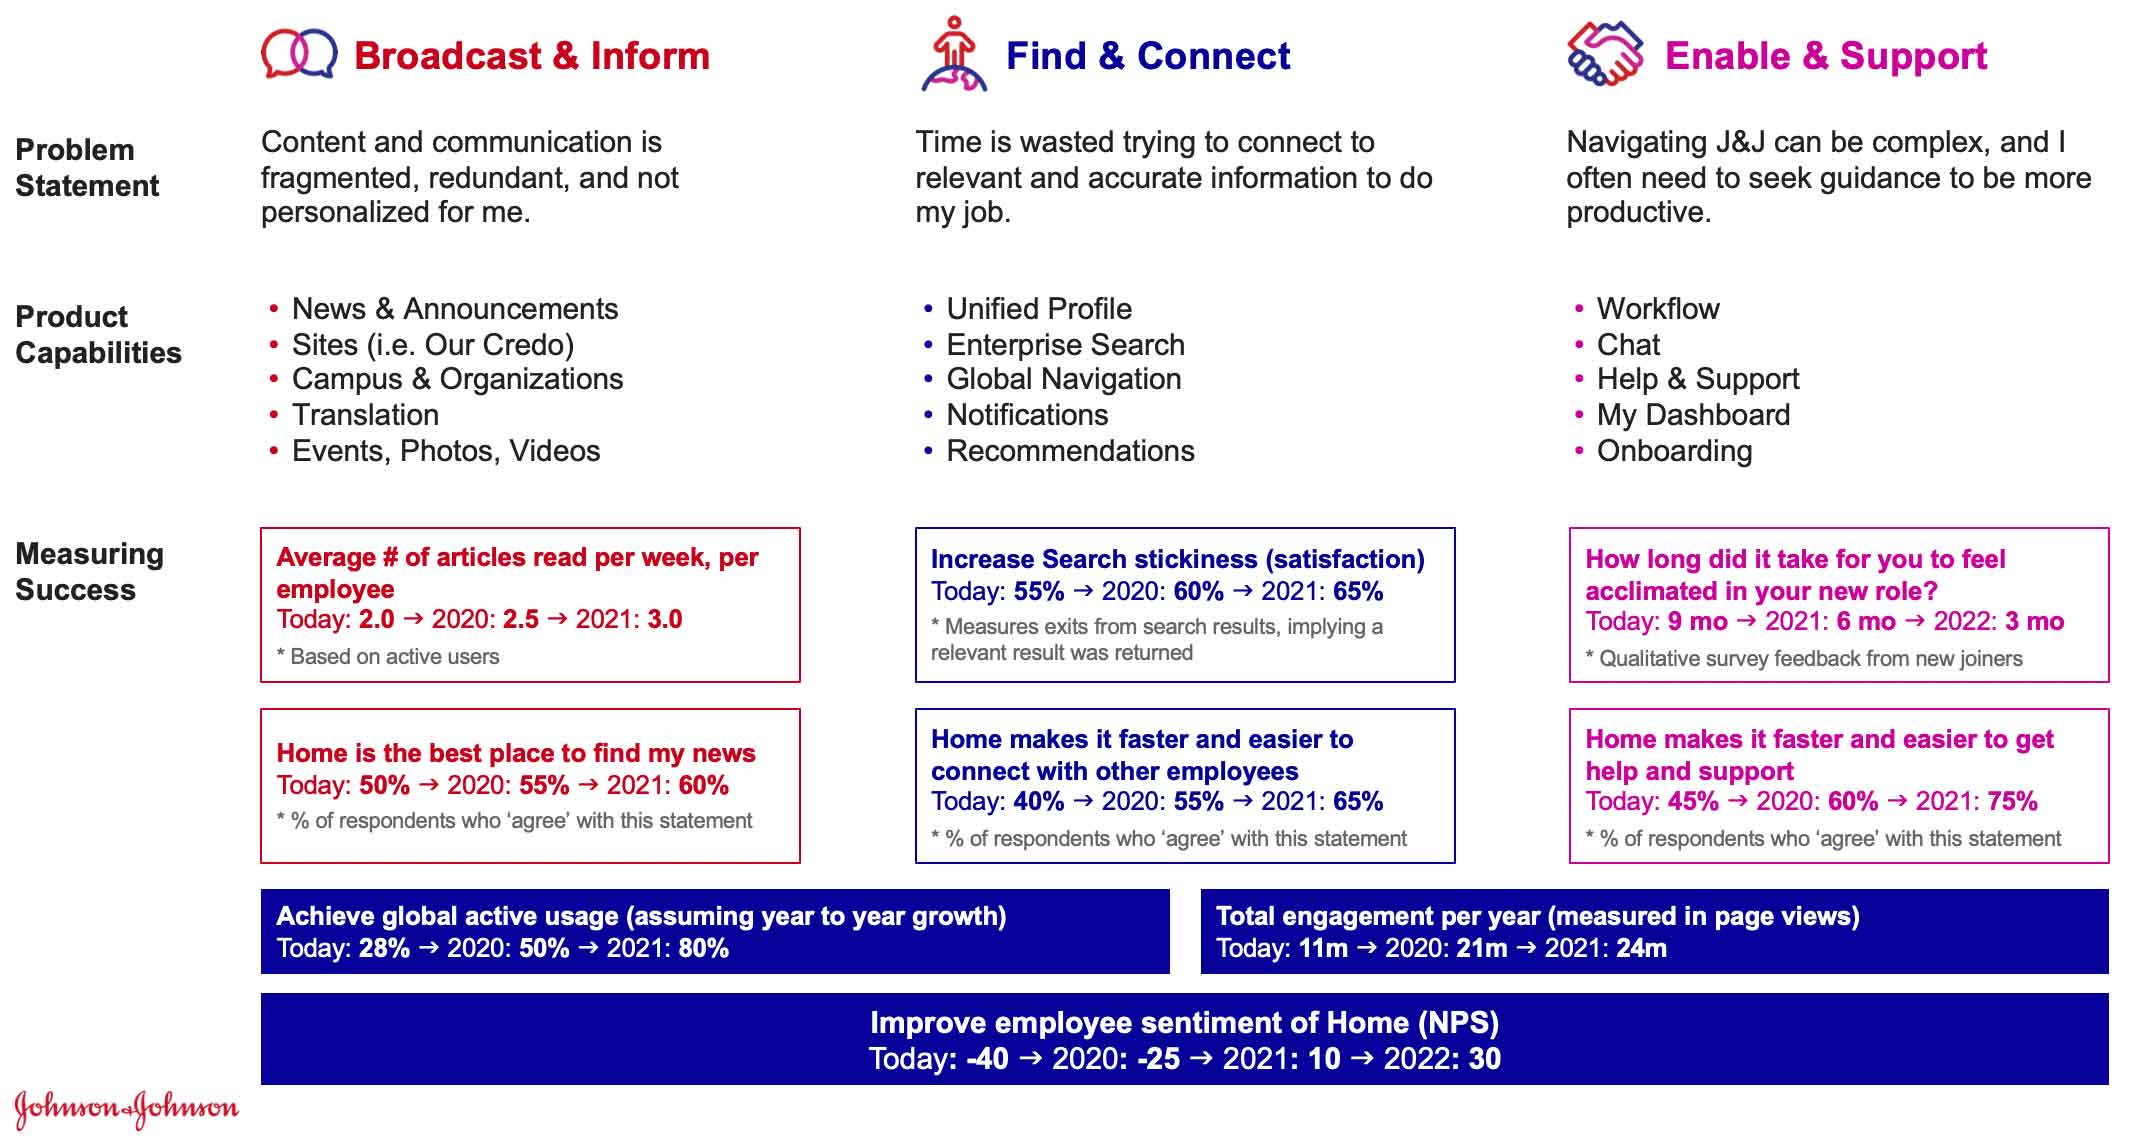 Johnson & Johnson's intranet roadmap